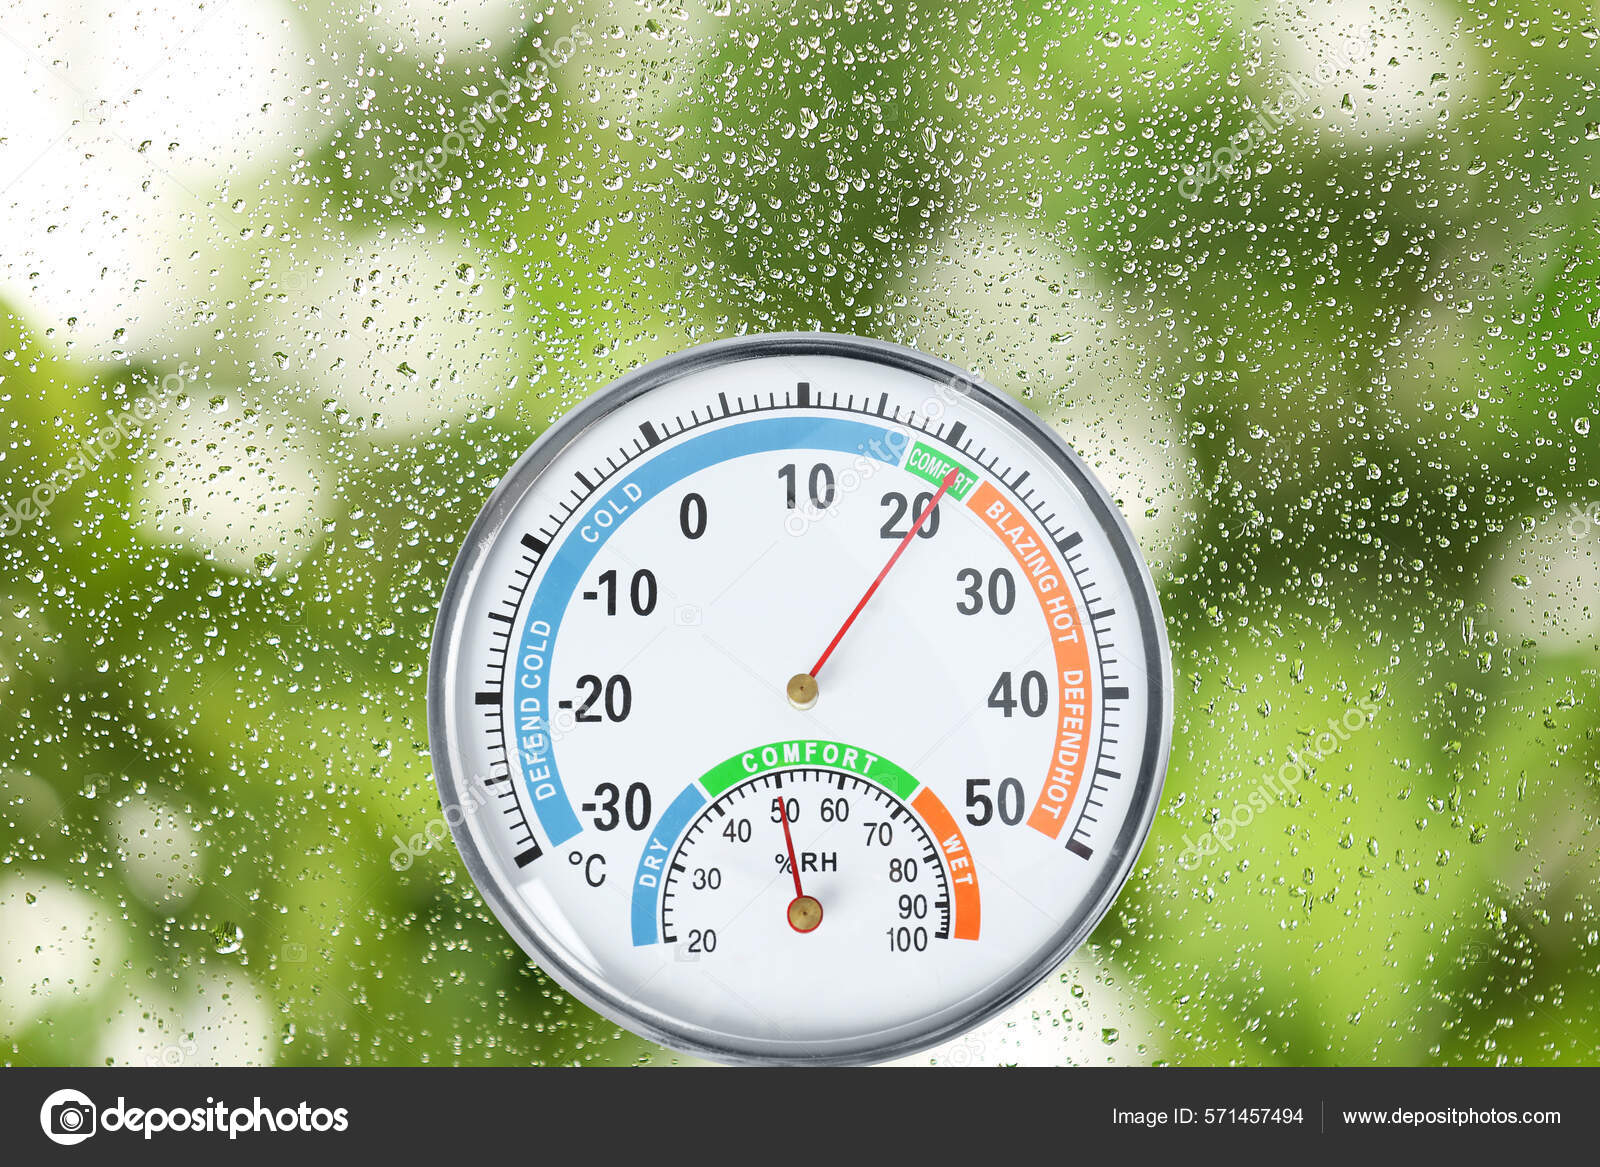 https://st.depositphotos.com/16122460/57145/i/1600/depositphotos_571457494-stock-photo-mechanical-hygrometer-thermometer-glass-water.jpg